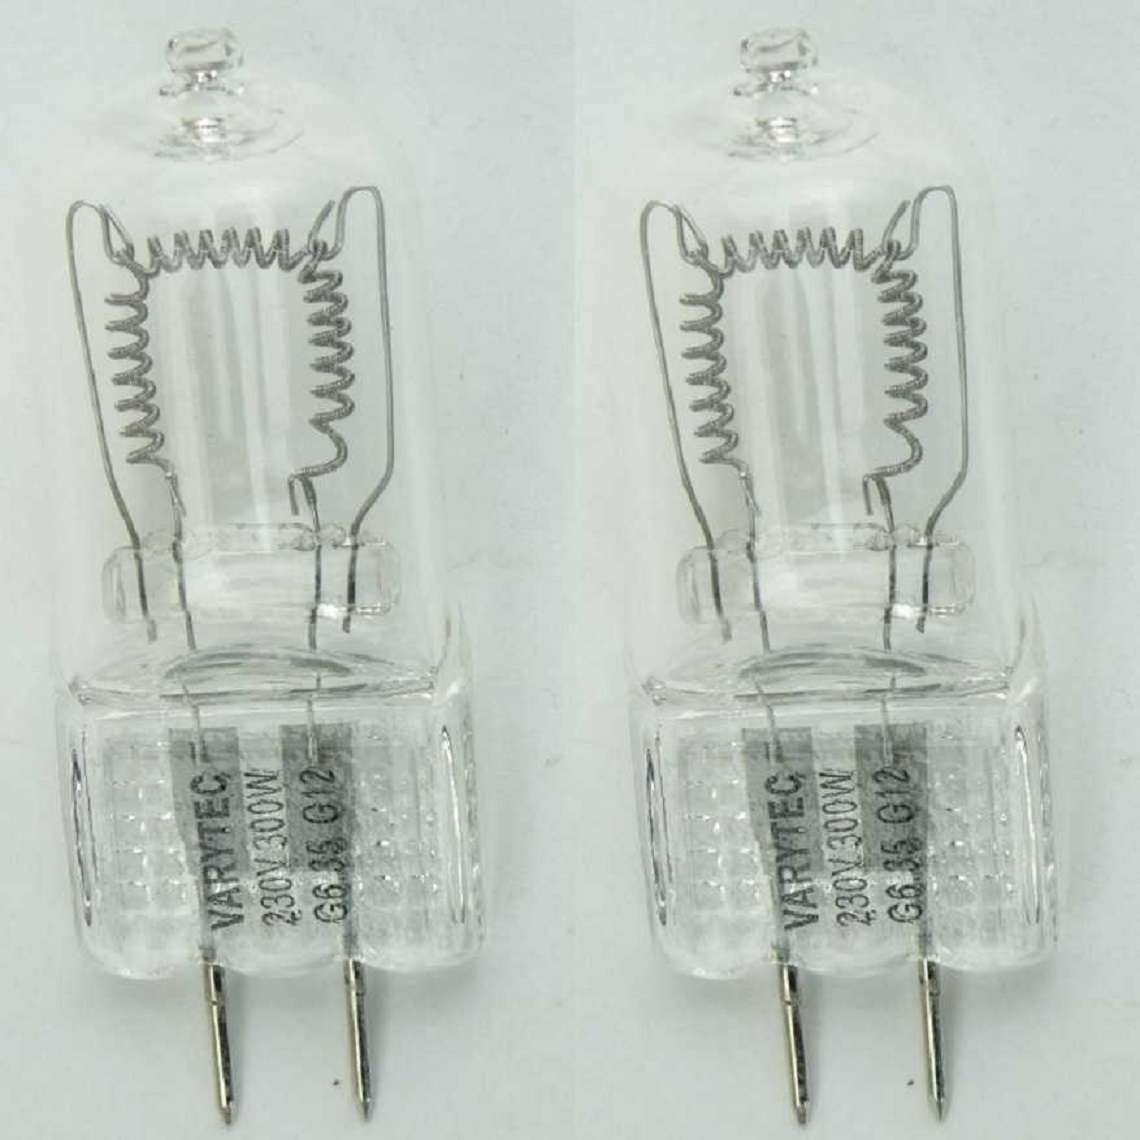 2 Stück 120 V 300 W G6,35 G 6,35 Gx6,35 Leuchtmittel Stiftsockel Lampe VARYTEC